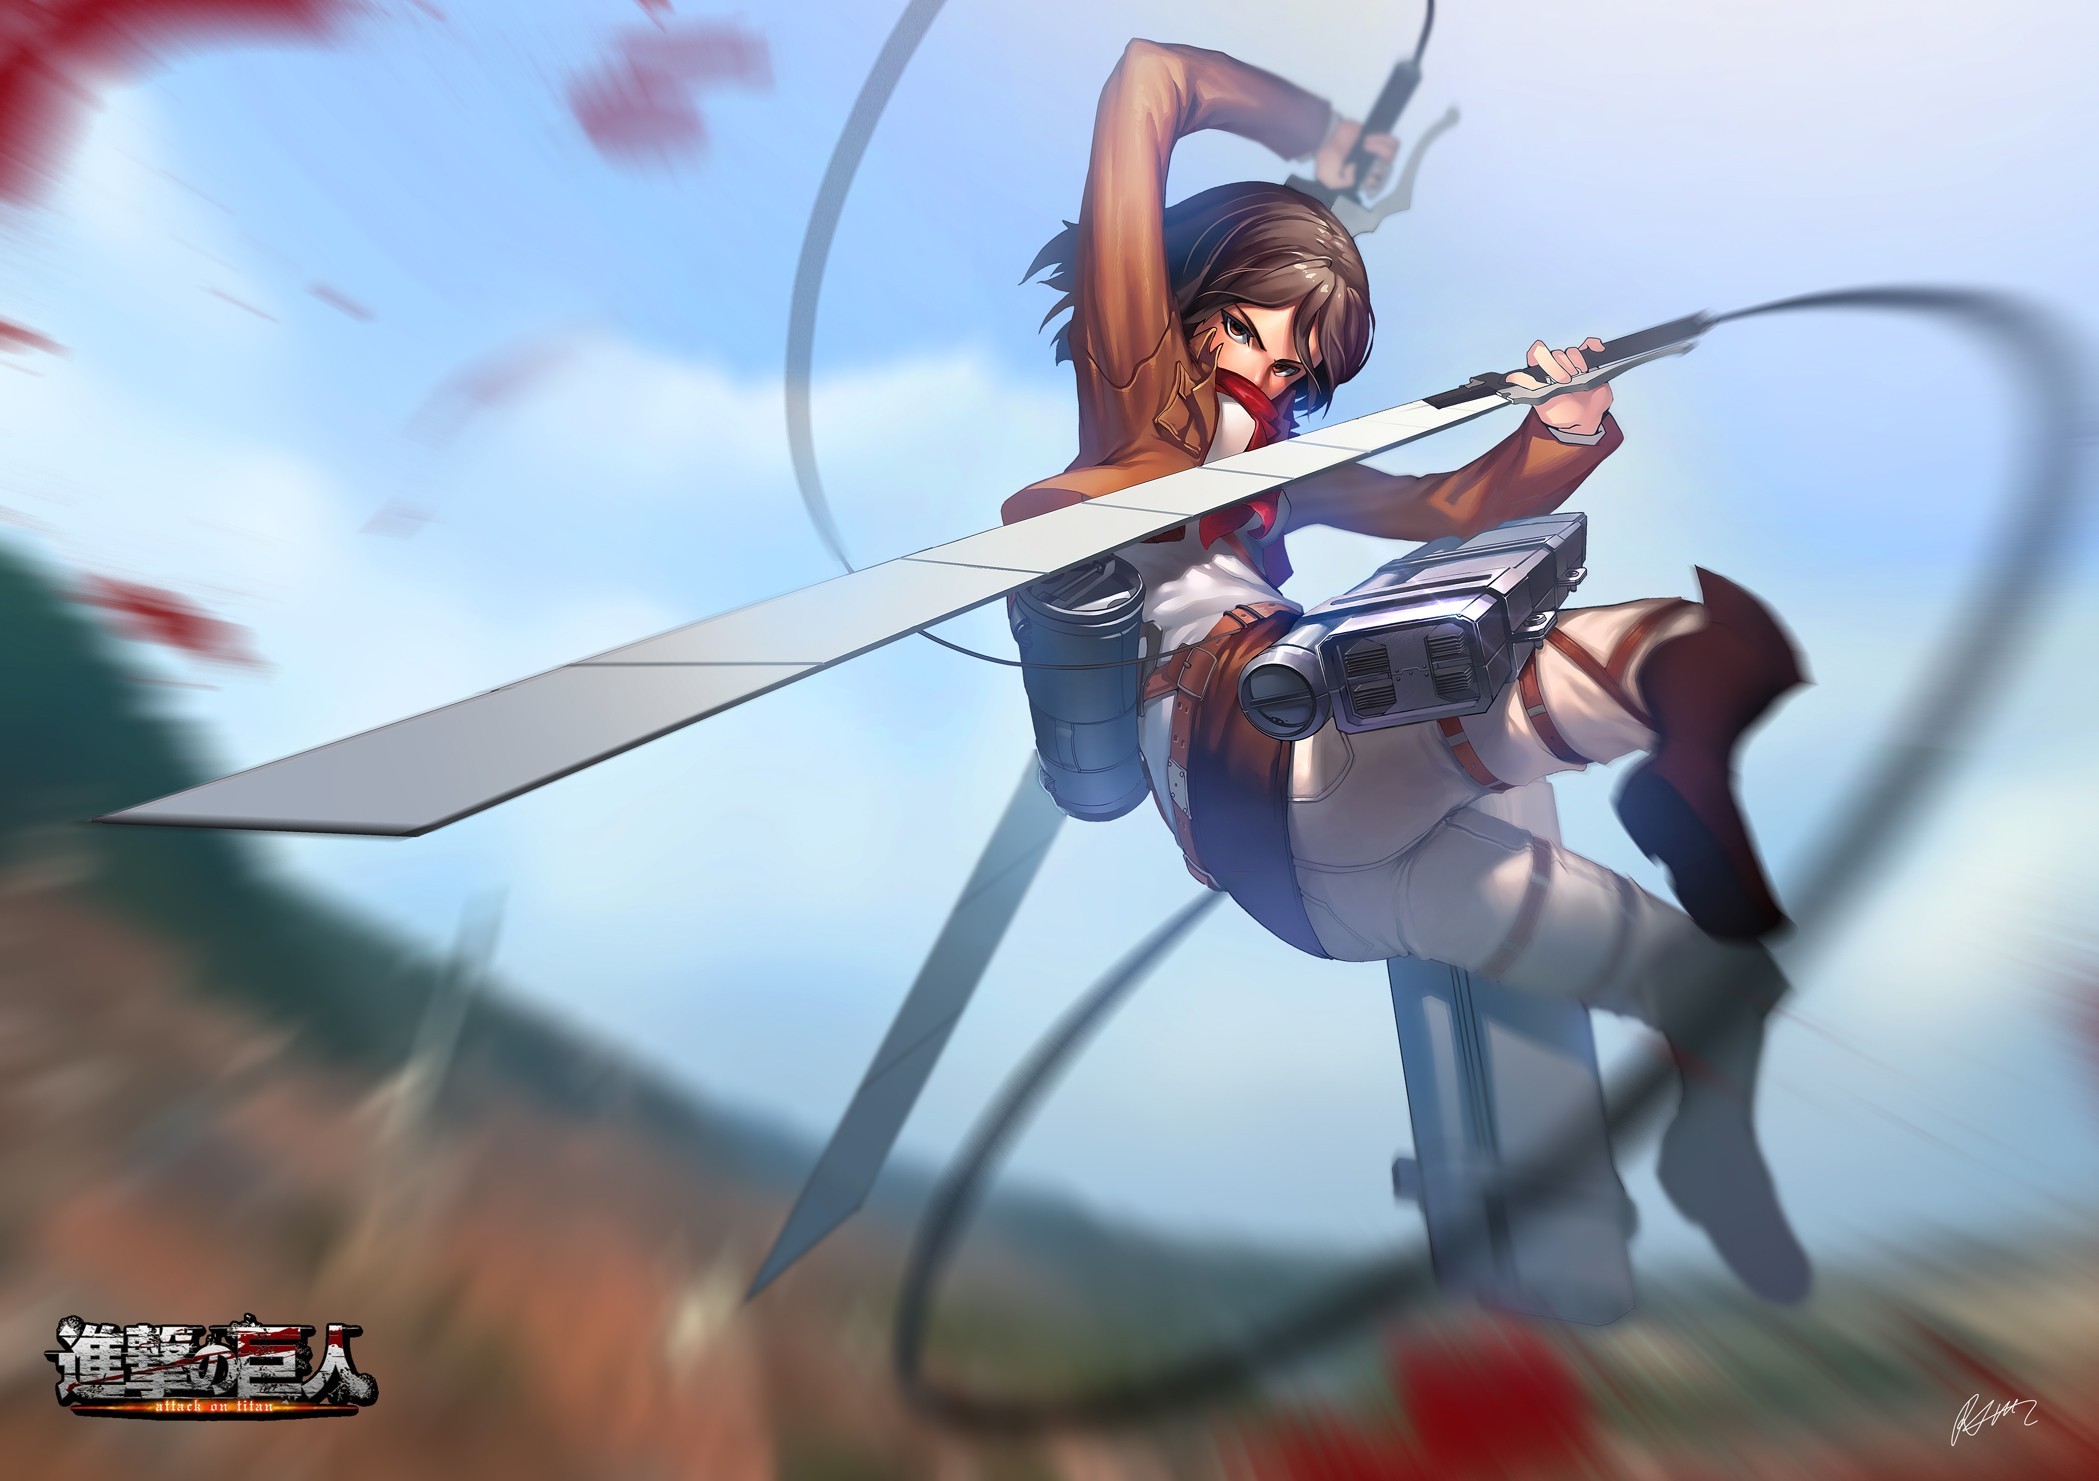 Anime 2099x1481 Shingeki no Kyojin anime anime girls Mikasa Ackerman weapon women with swords sword brunette